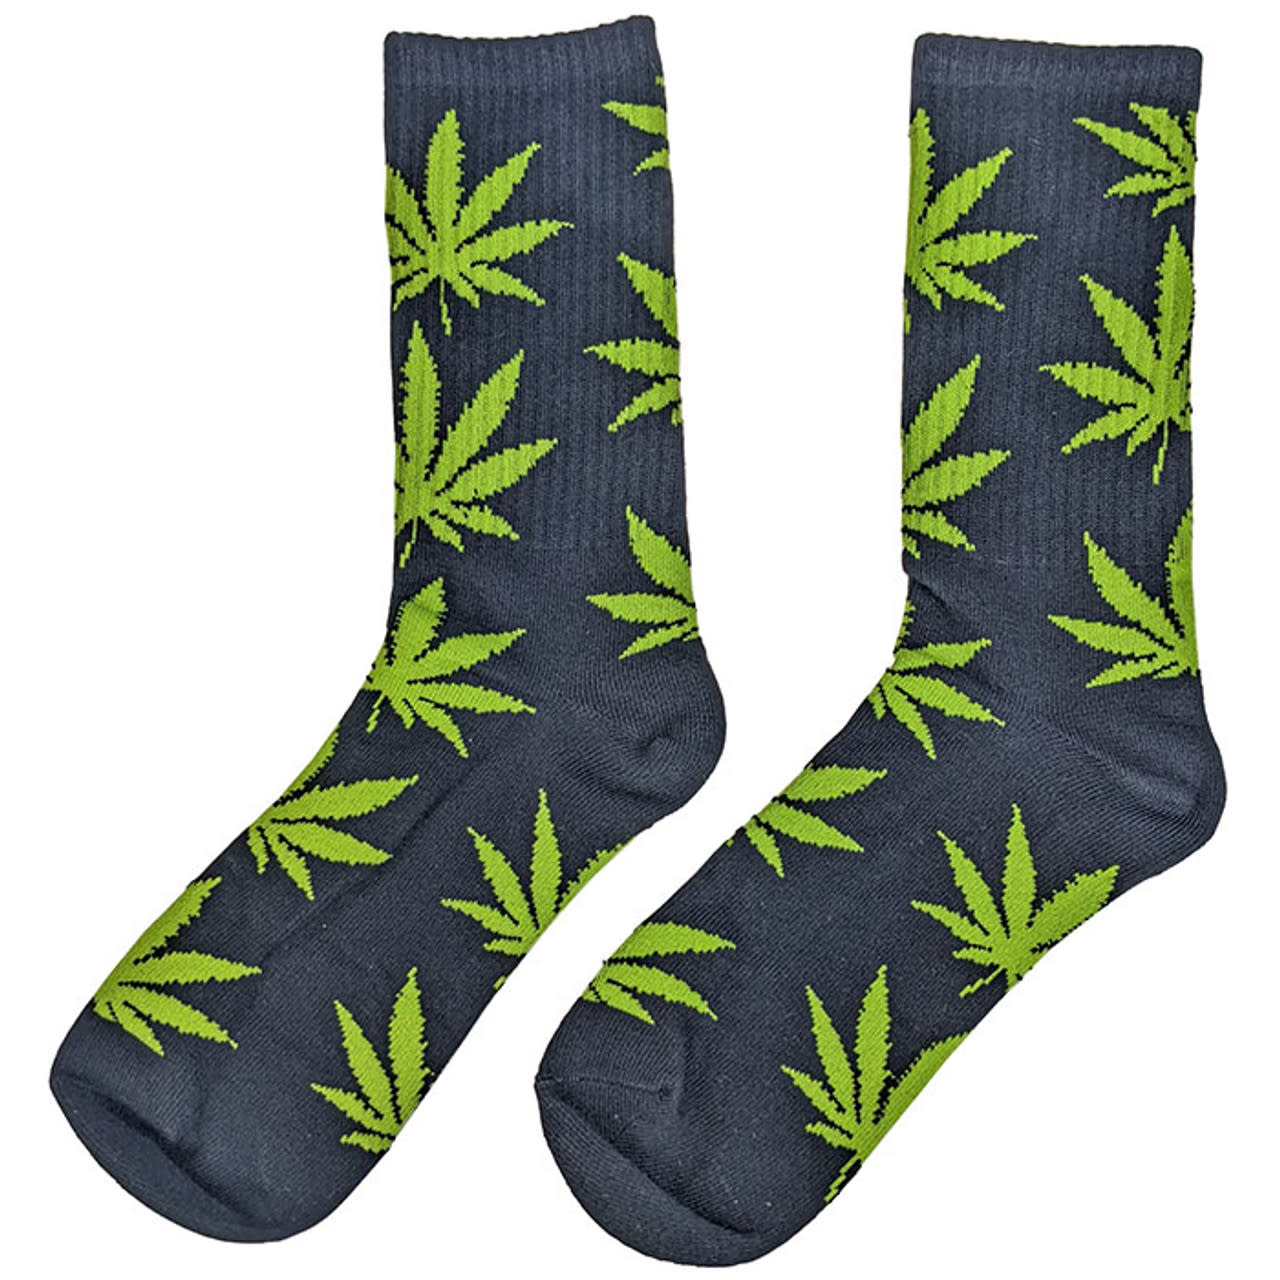 Cannabis Leaf Printed Socks - Black/Green